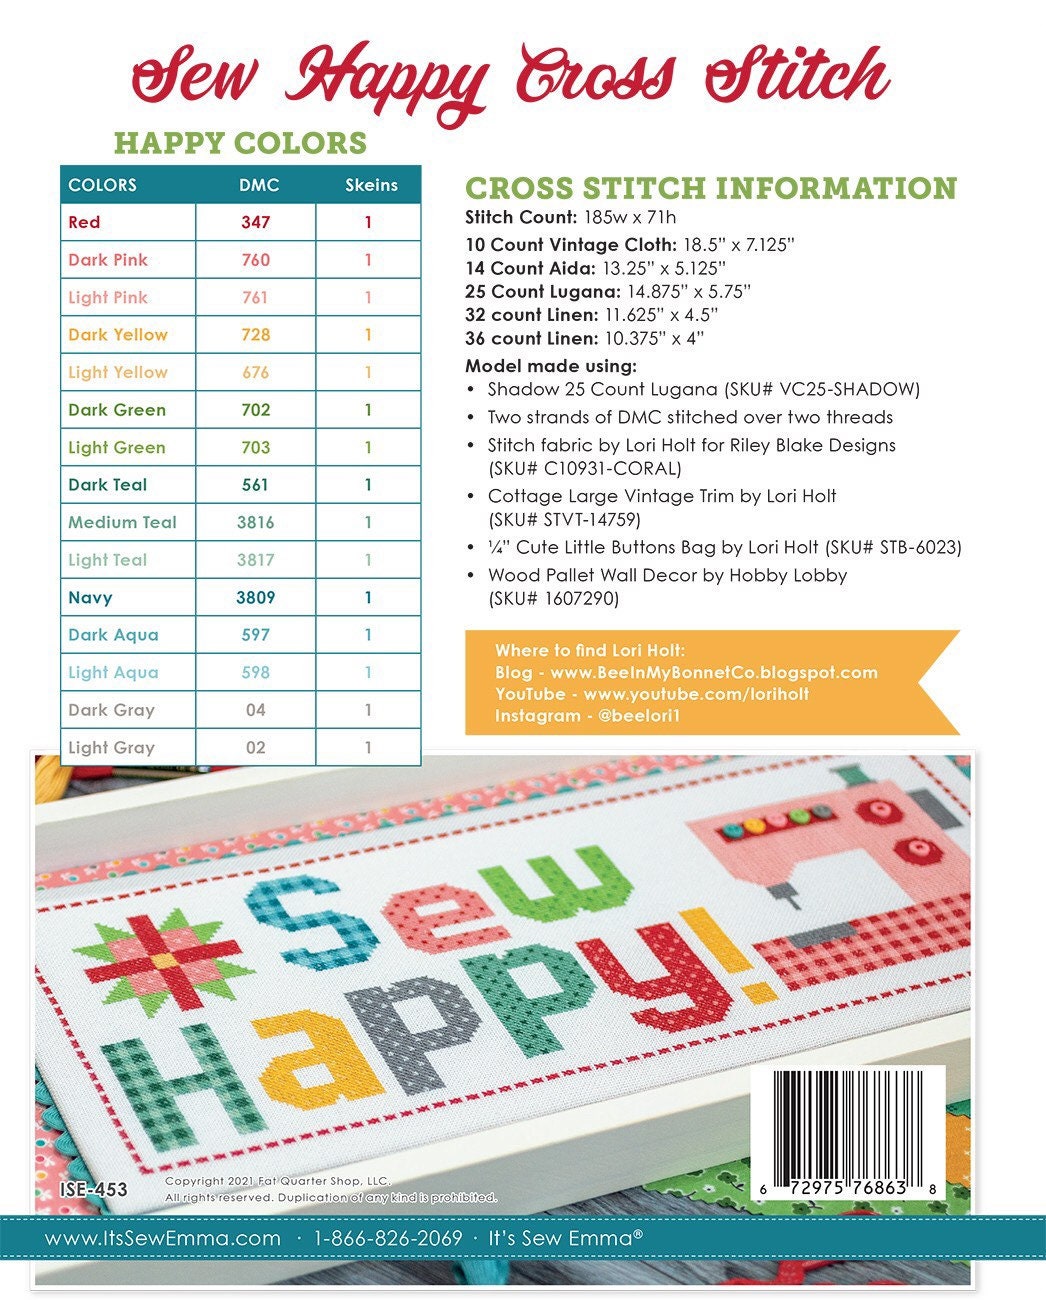 Sew Happy Cross Stitch Pattern - It’s Sew Emma - Lori Holt - Bee In My Bonnet